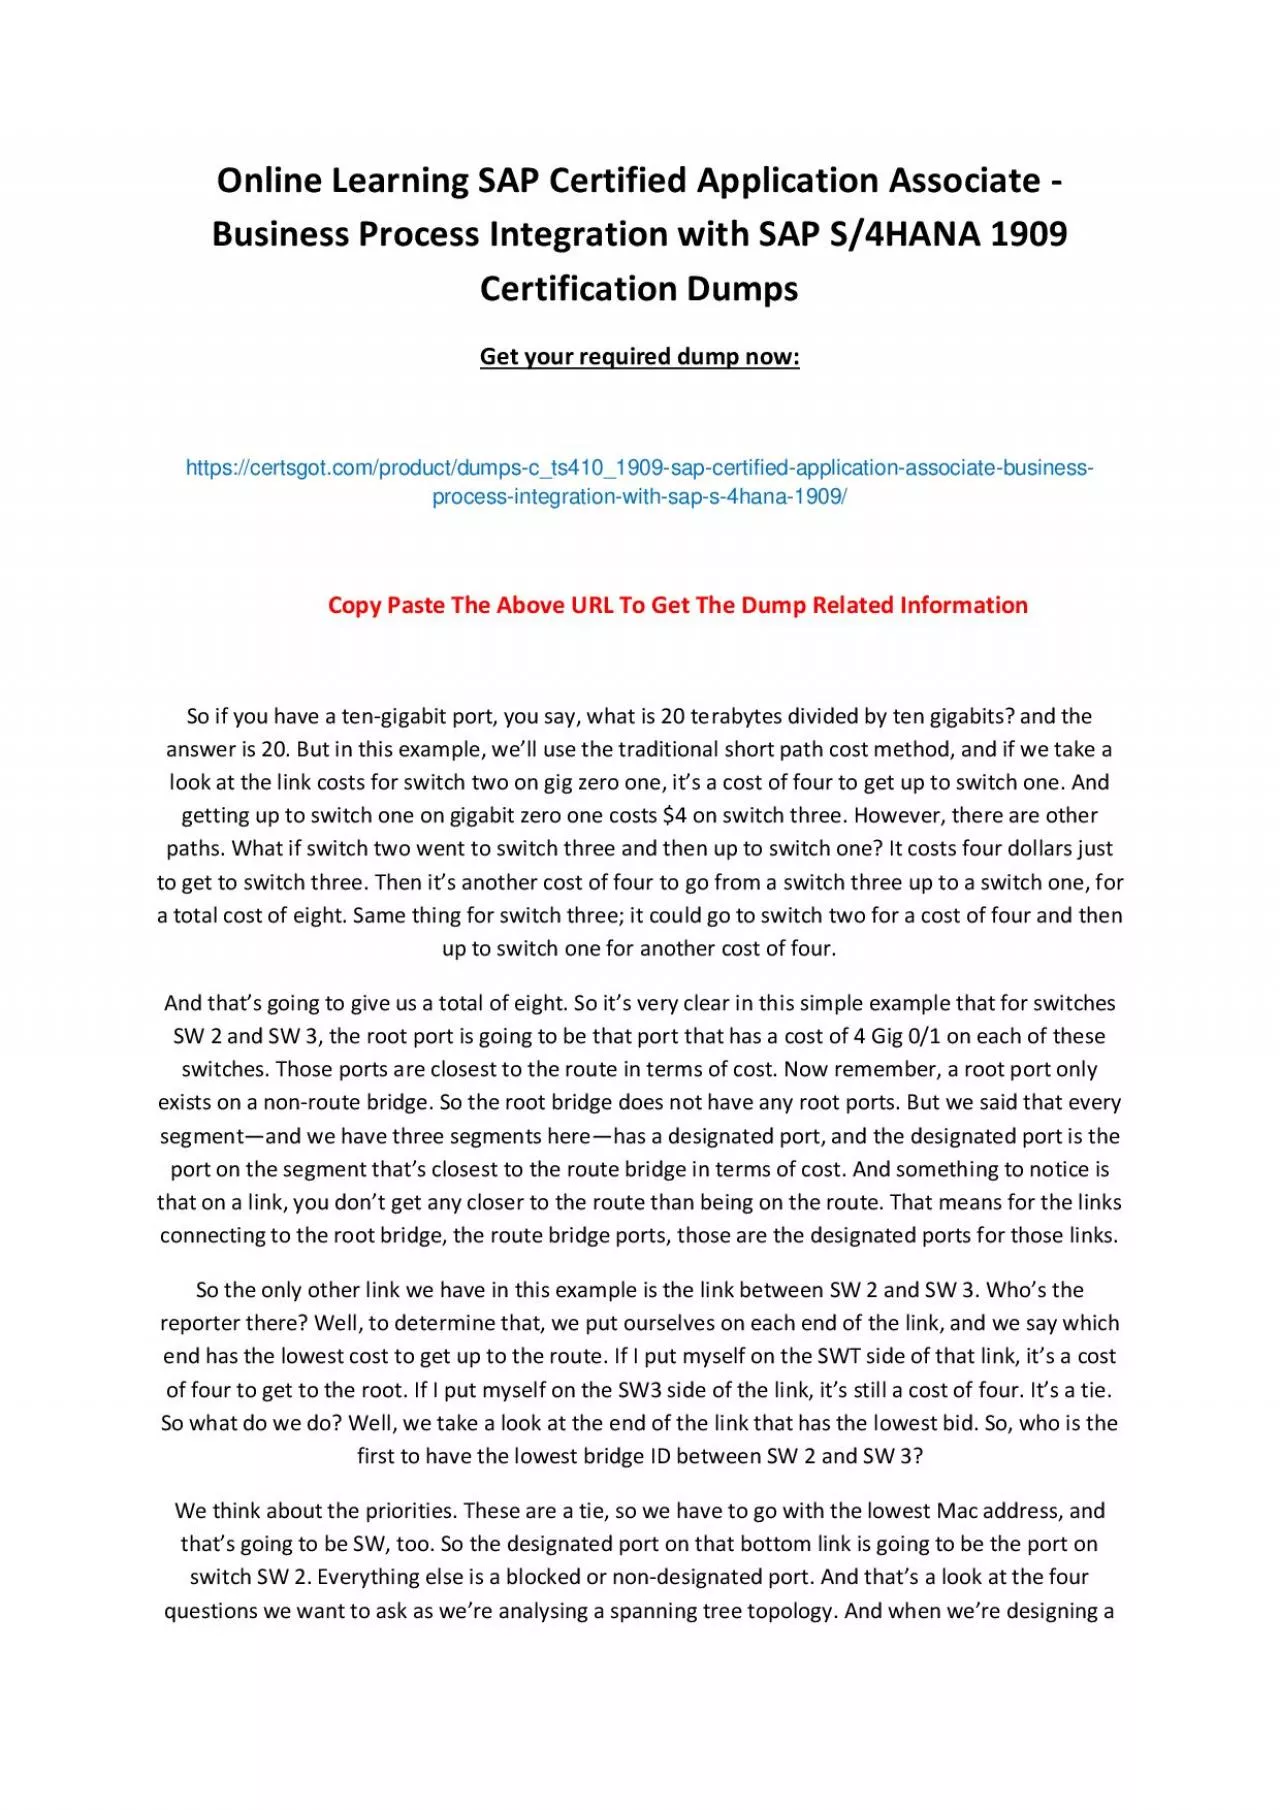 C_TS410_1909 - SAP Certified Application Associate - Business Process Integration with